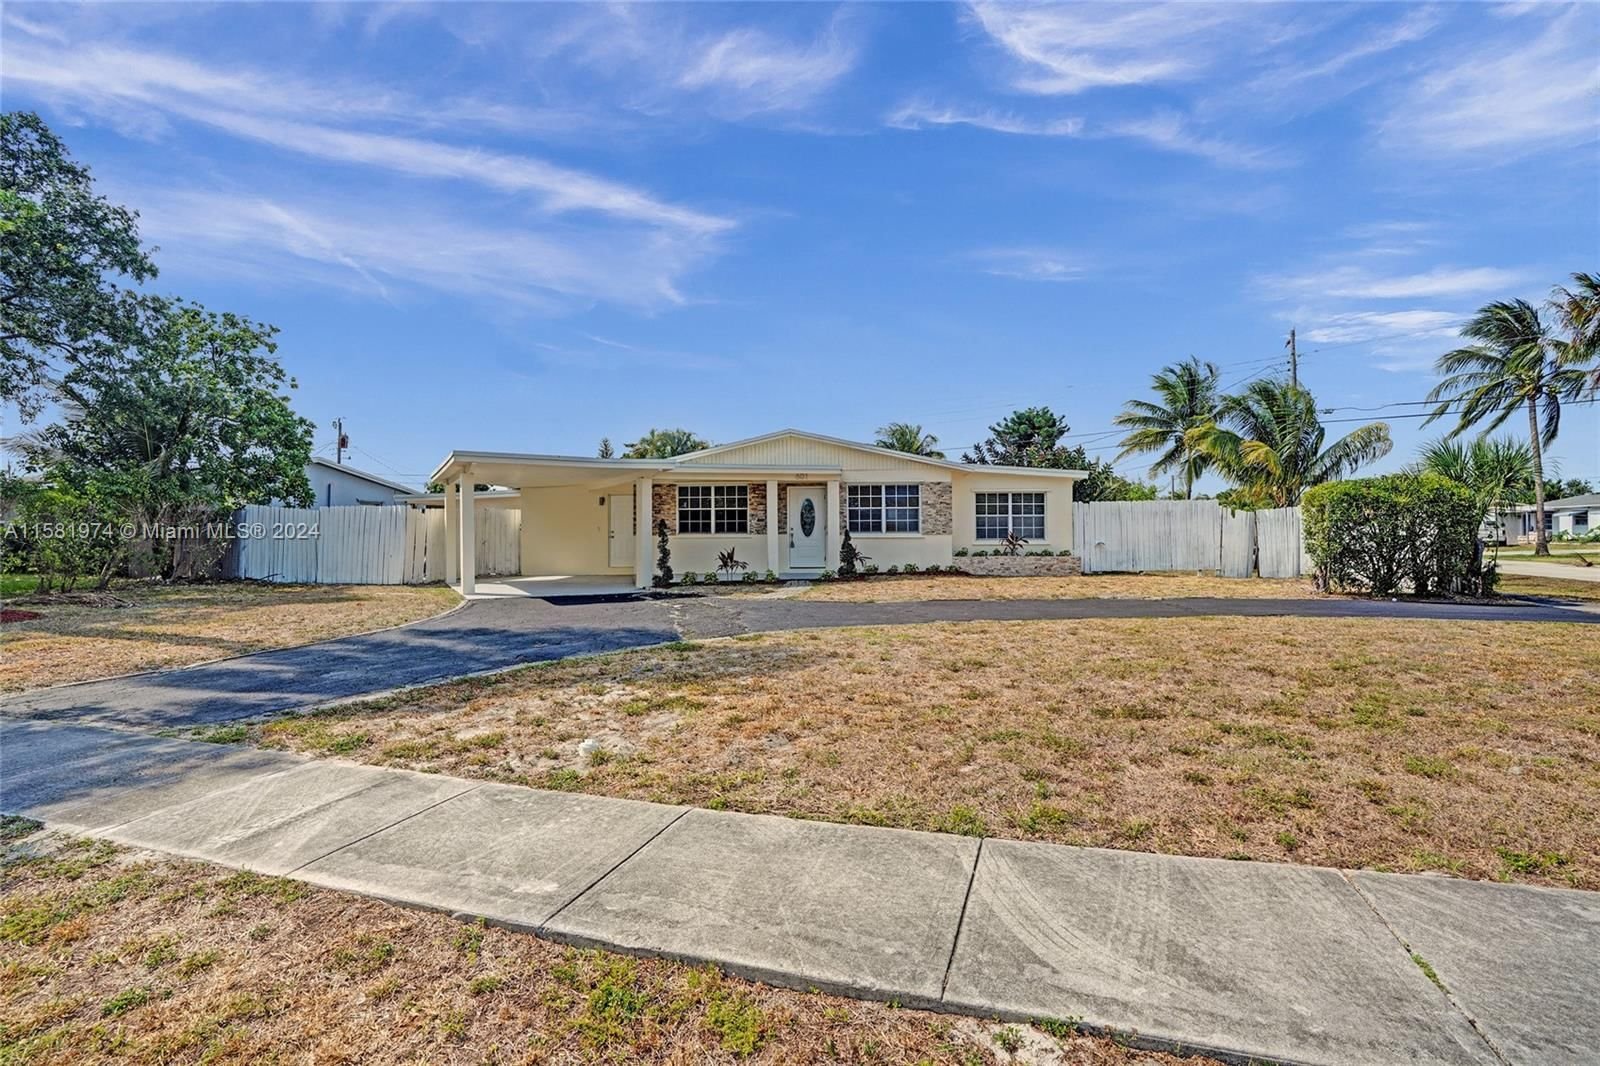 Real estate property located at 601 37th St, Broward County, BONNIE LOCH SEC 1, Deerfield Beach, FL